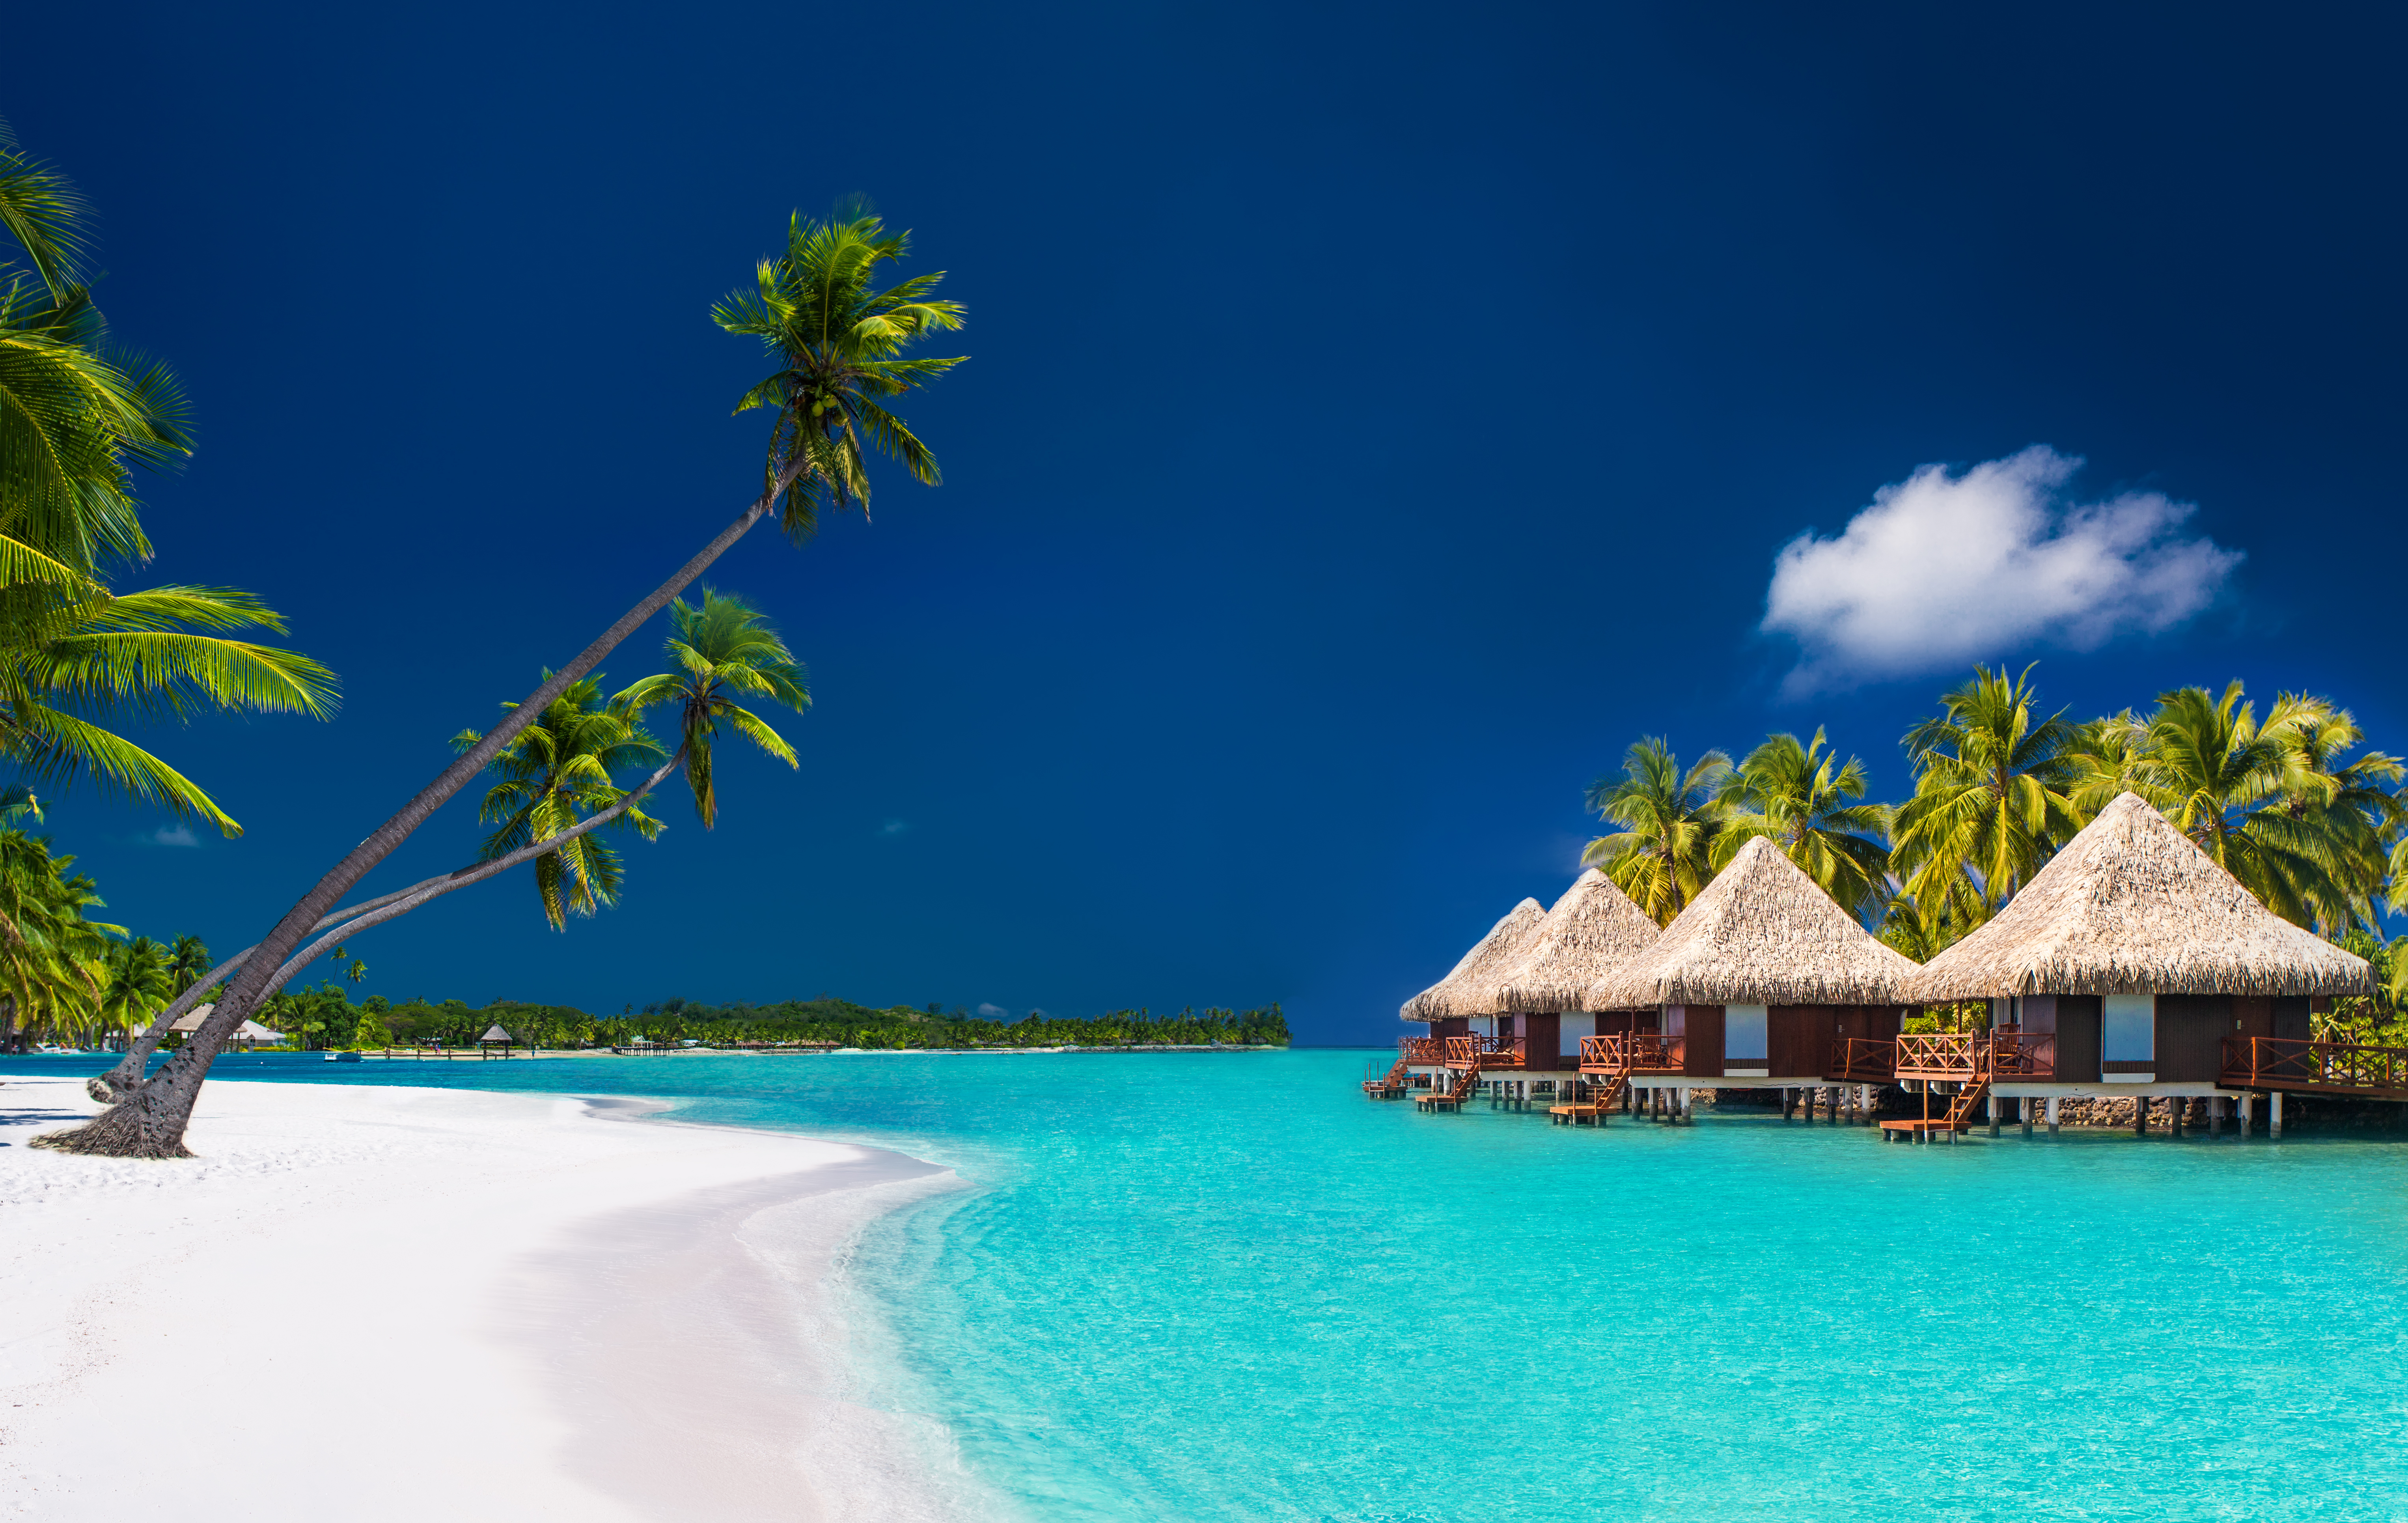 Villen am Strand in Bora Bora | Quelle: Shutterstock